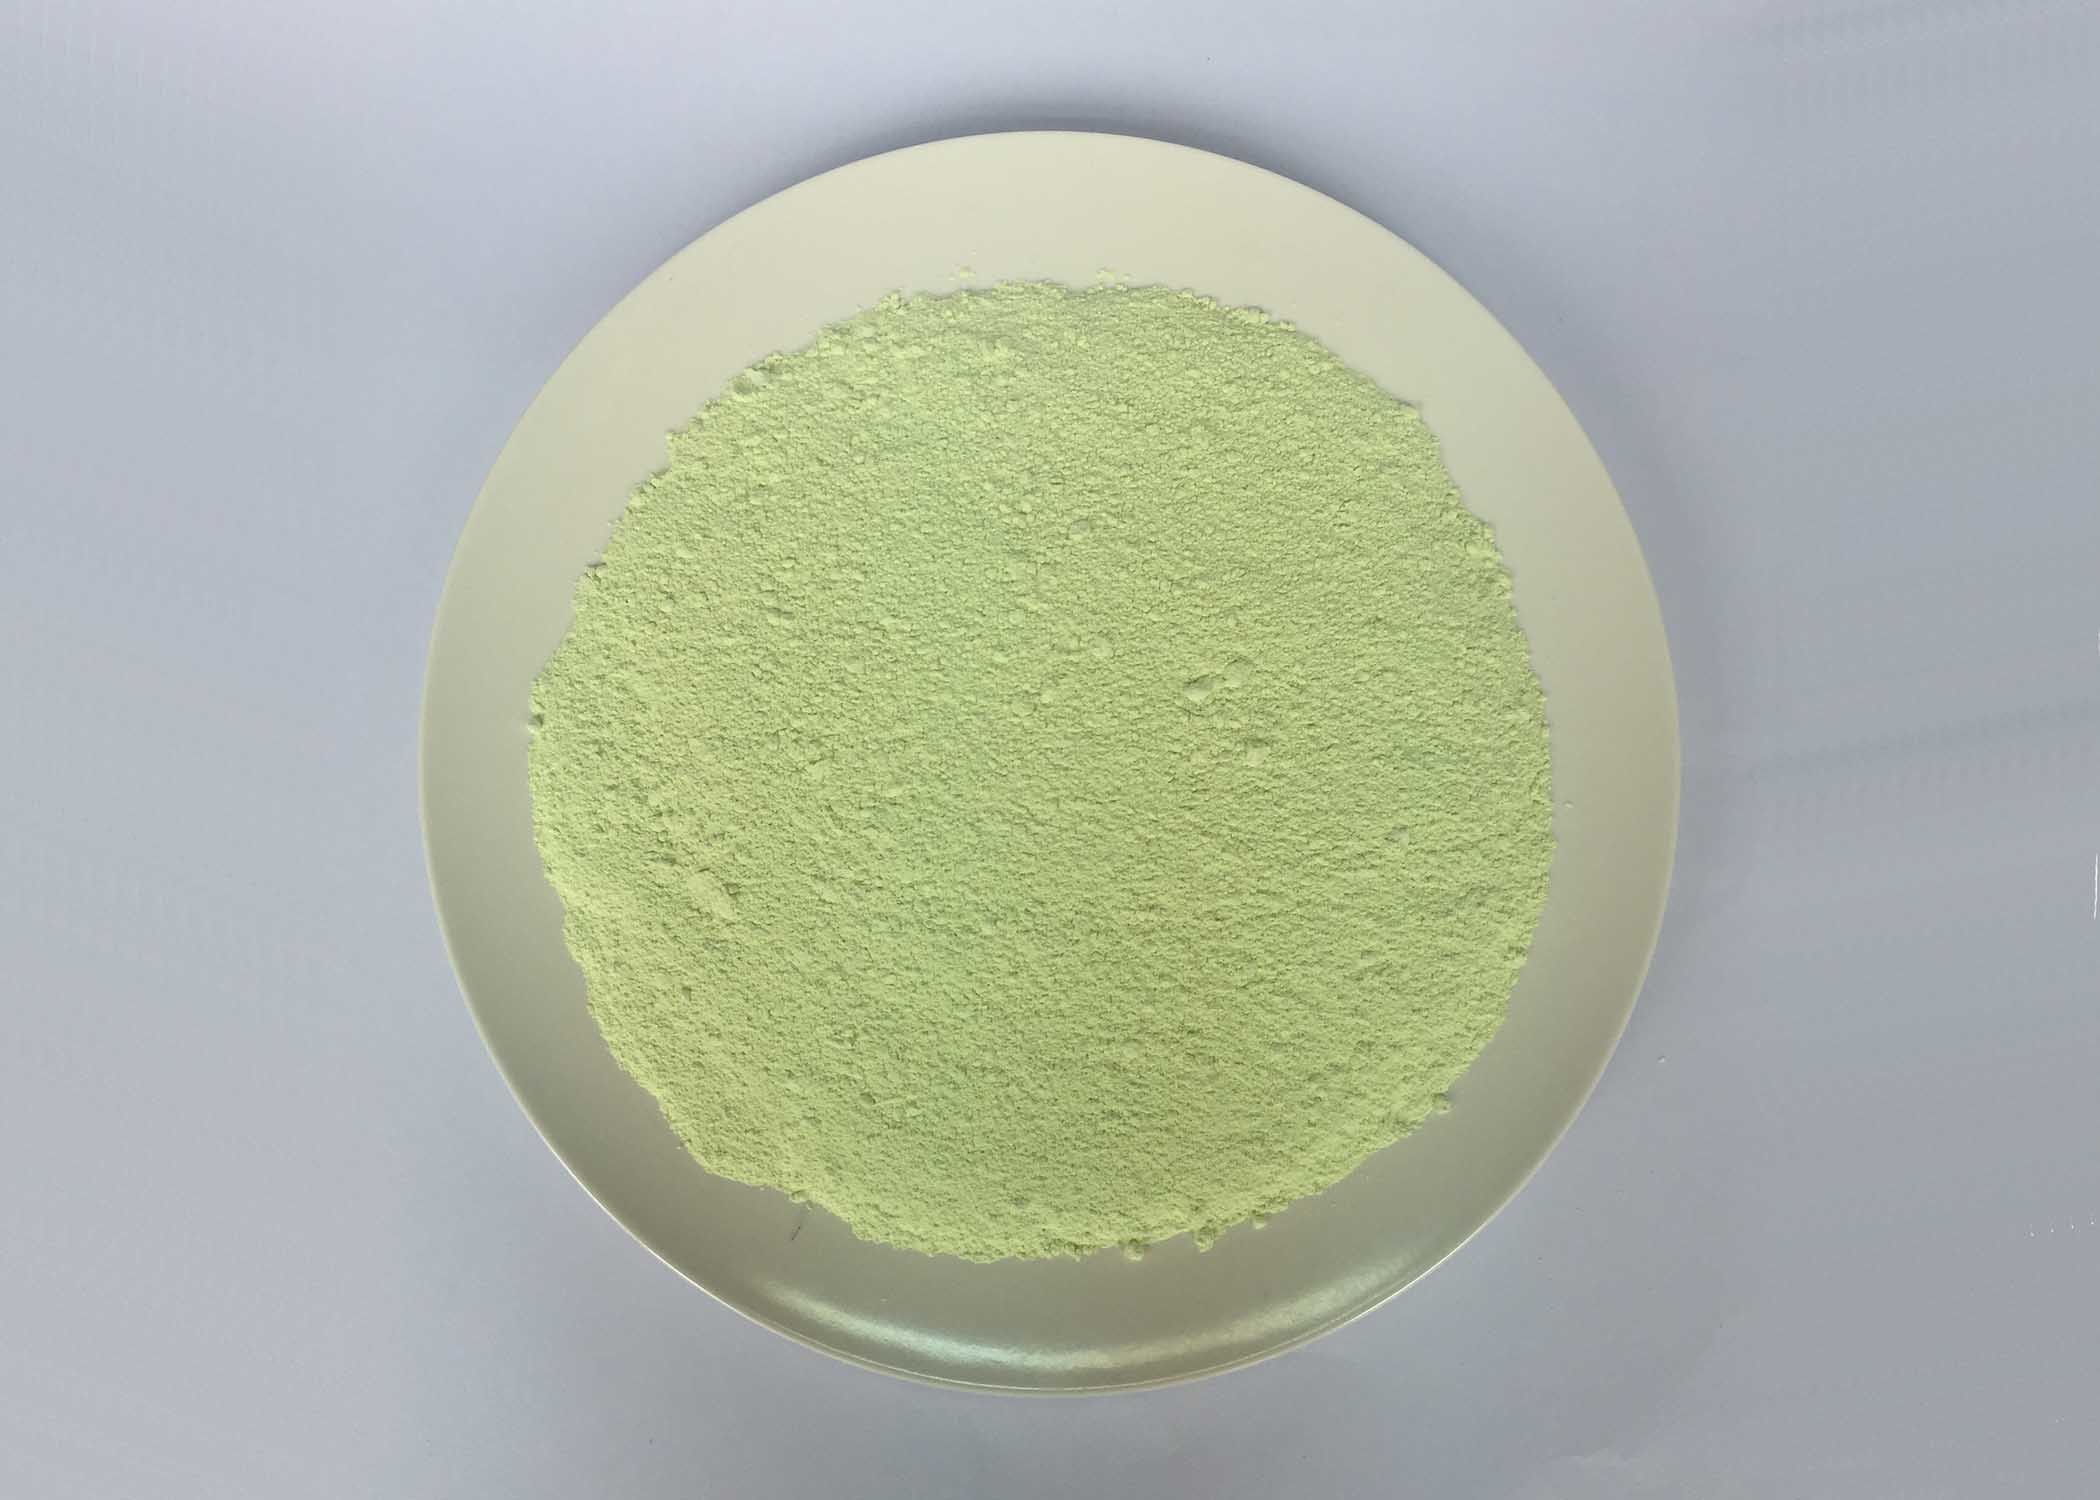 Hellgrüne Farbmelamin-Formmasse-Nahrungsmittelgrad-hohe Qualität